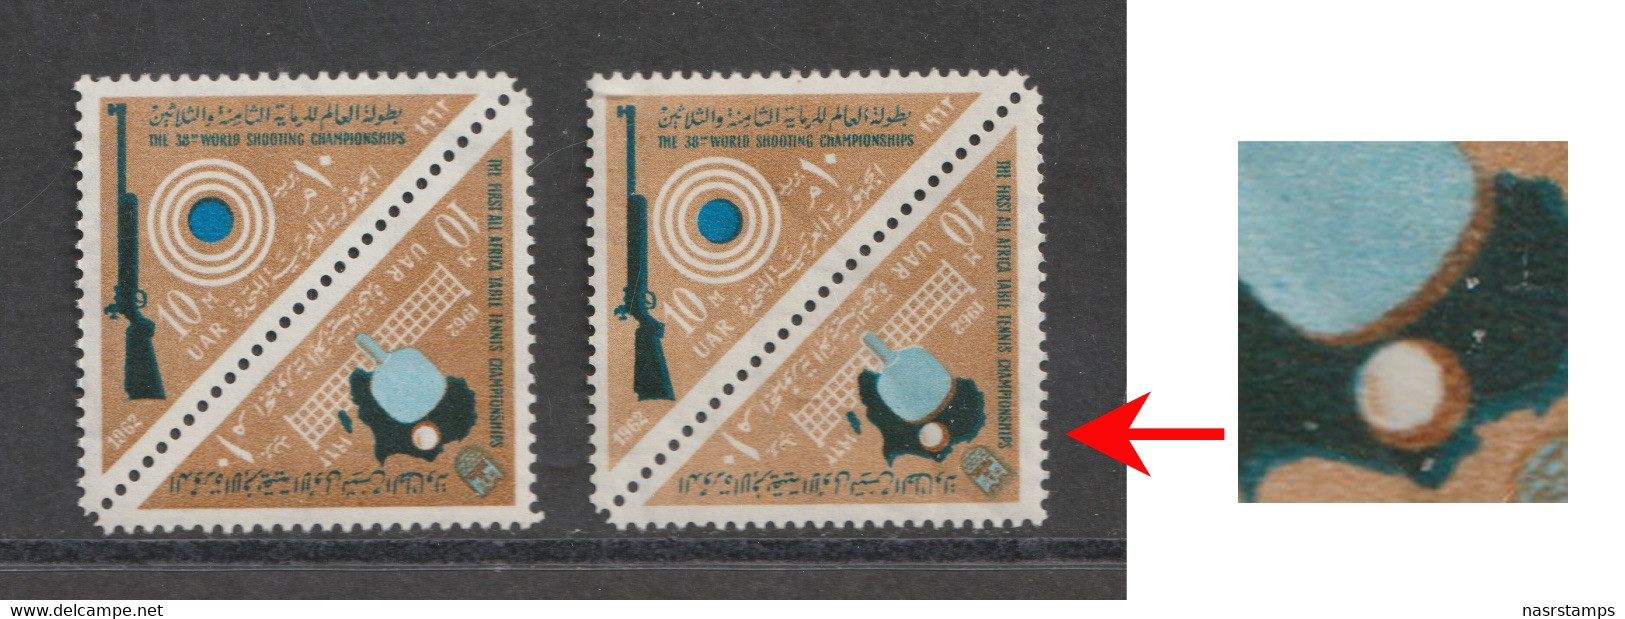 Egypt - 1962 - Rare Error - Brown Color Shifted - ( 38th World Shooting Championships ) - MNH (**) - Nuovi